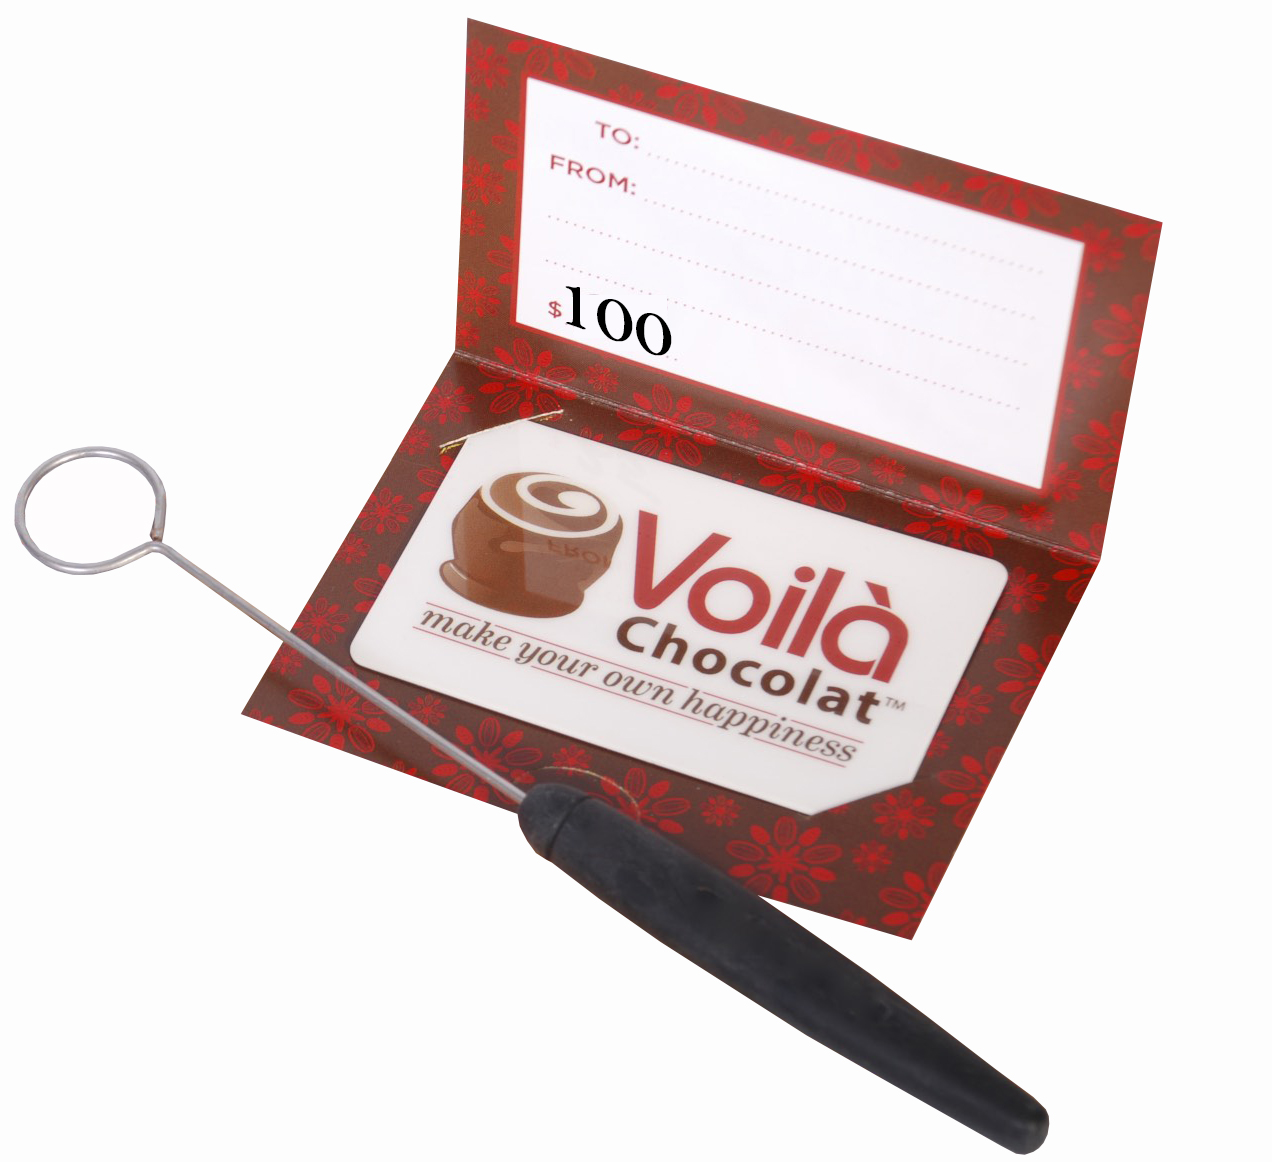 Voila Chocolat gift card